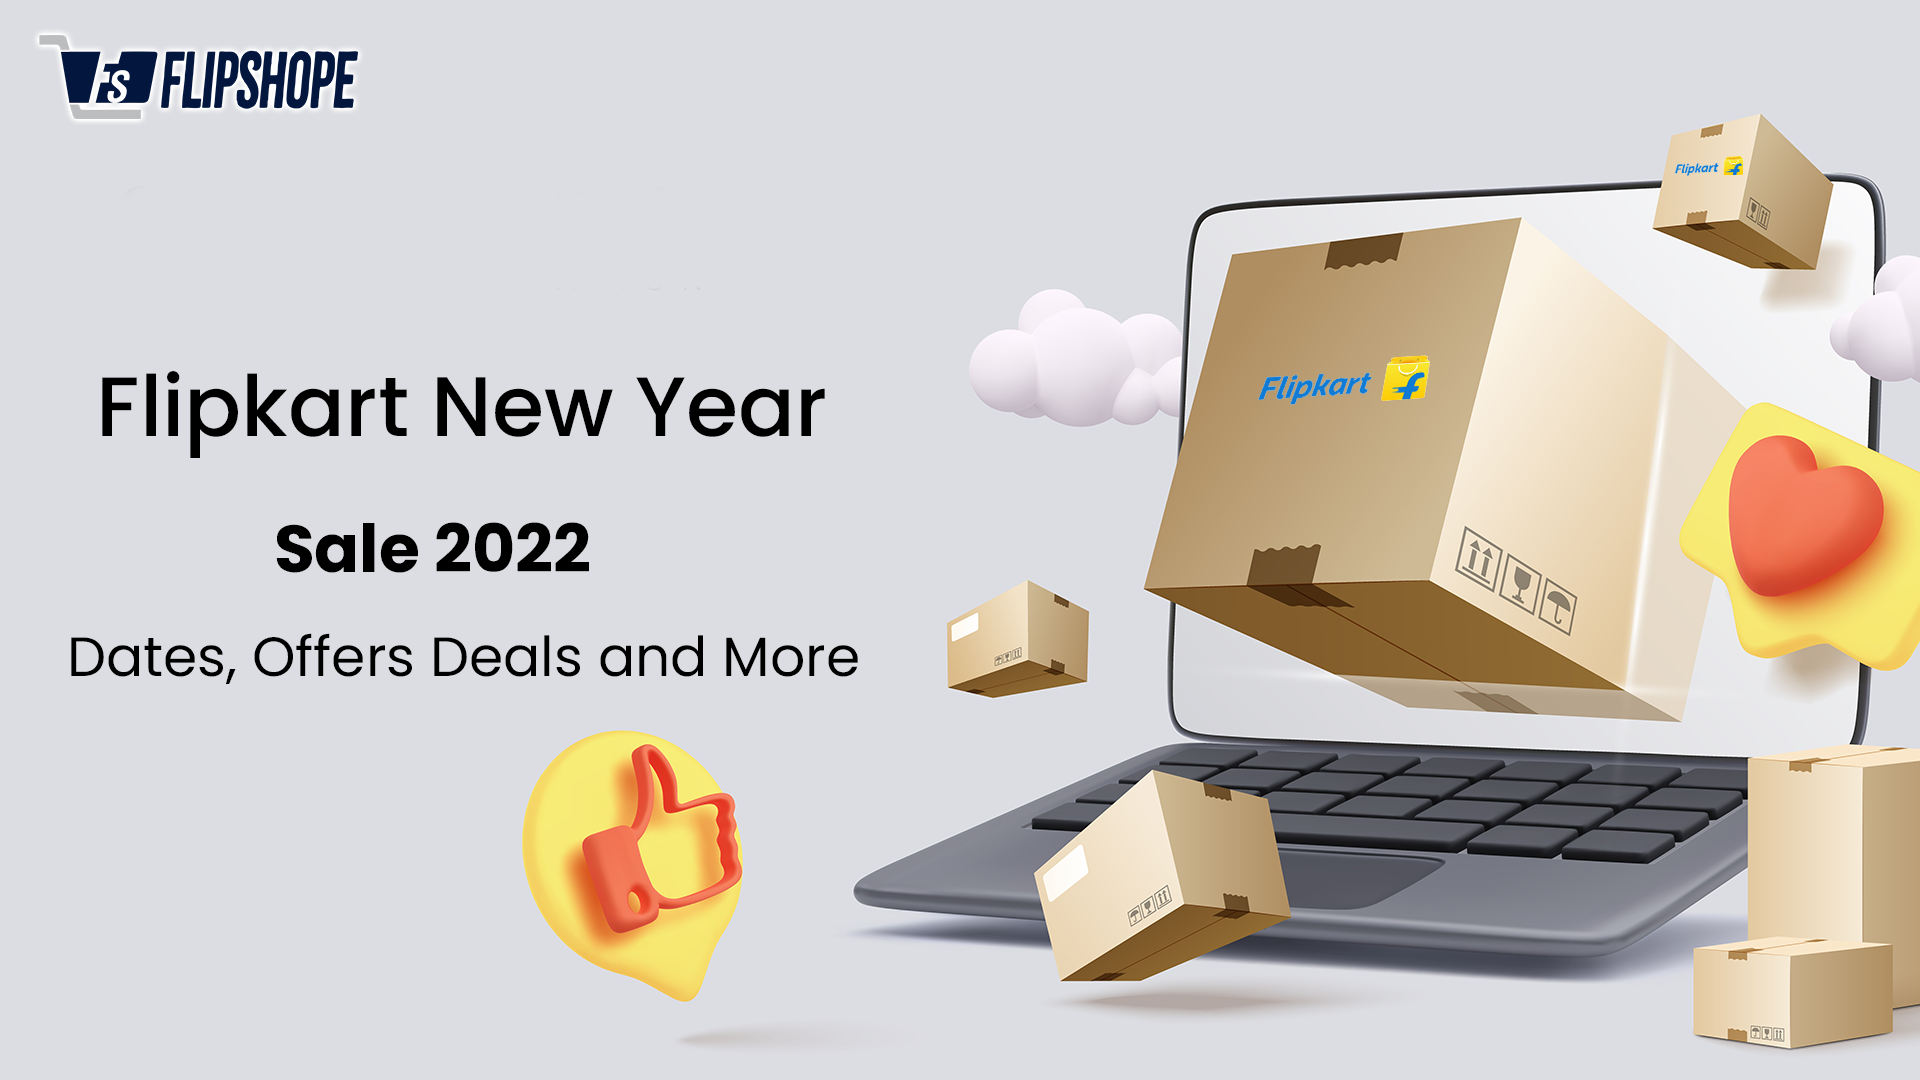 Flipkart New Year Sale offers